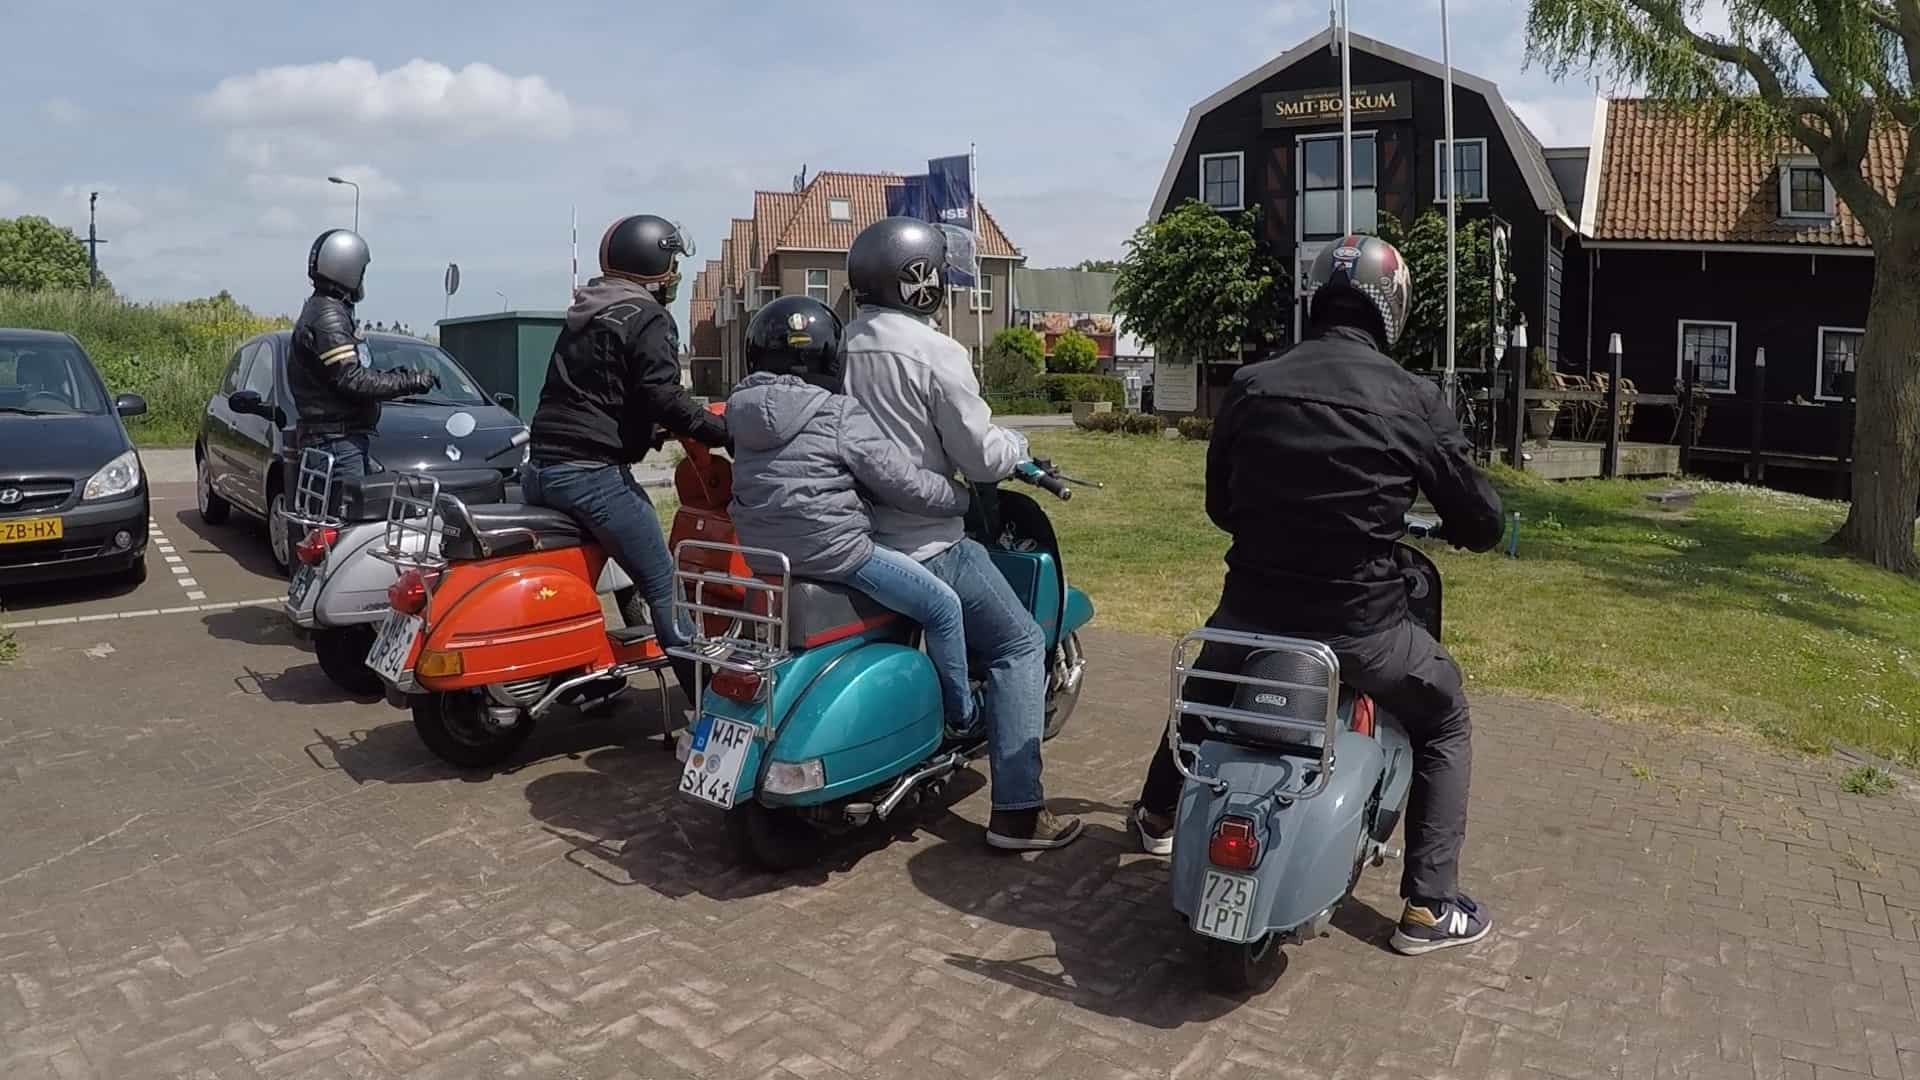 2019, Ausfahrt, Holland, Ijsselmeer